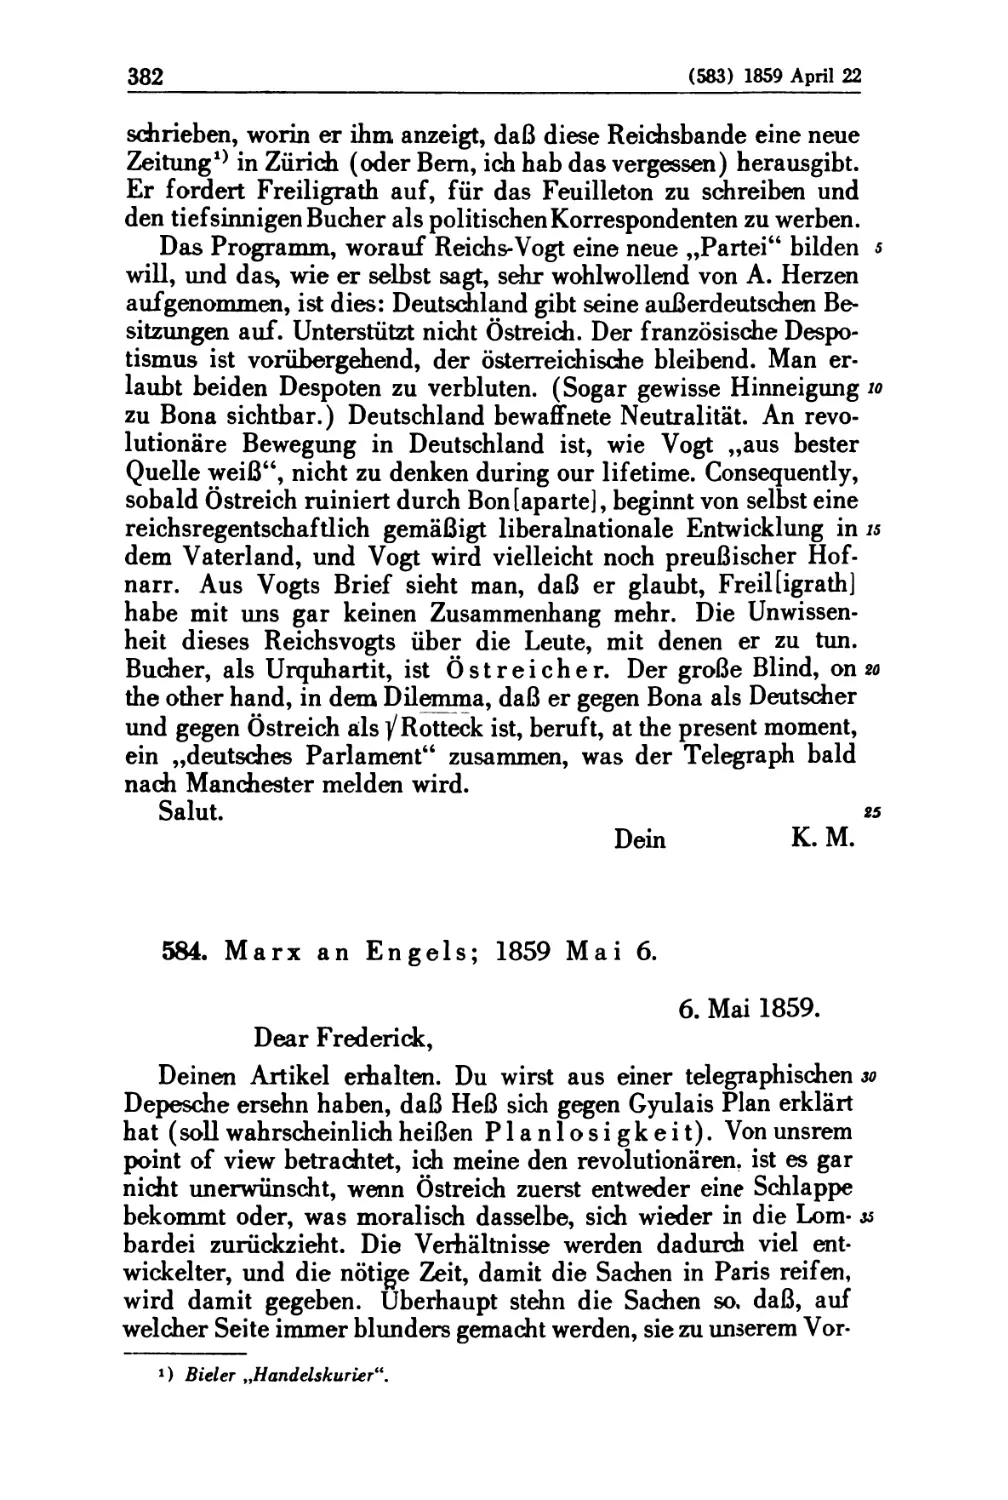 584. Marx an Engels; 1859 Mai 6